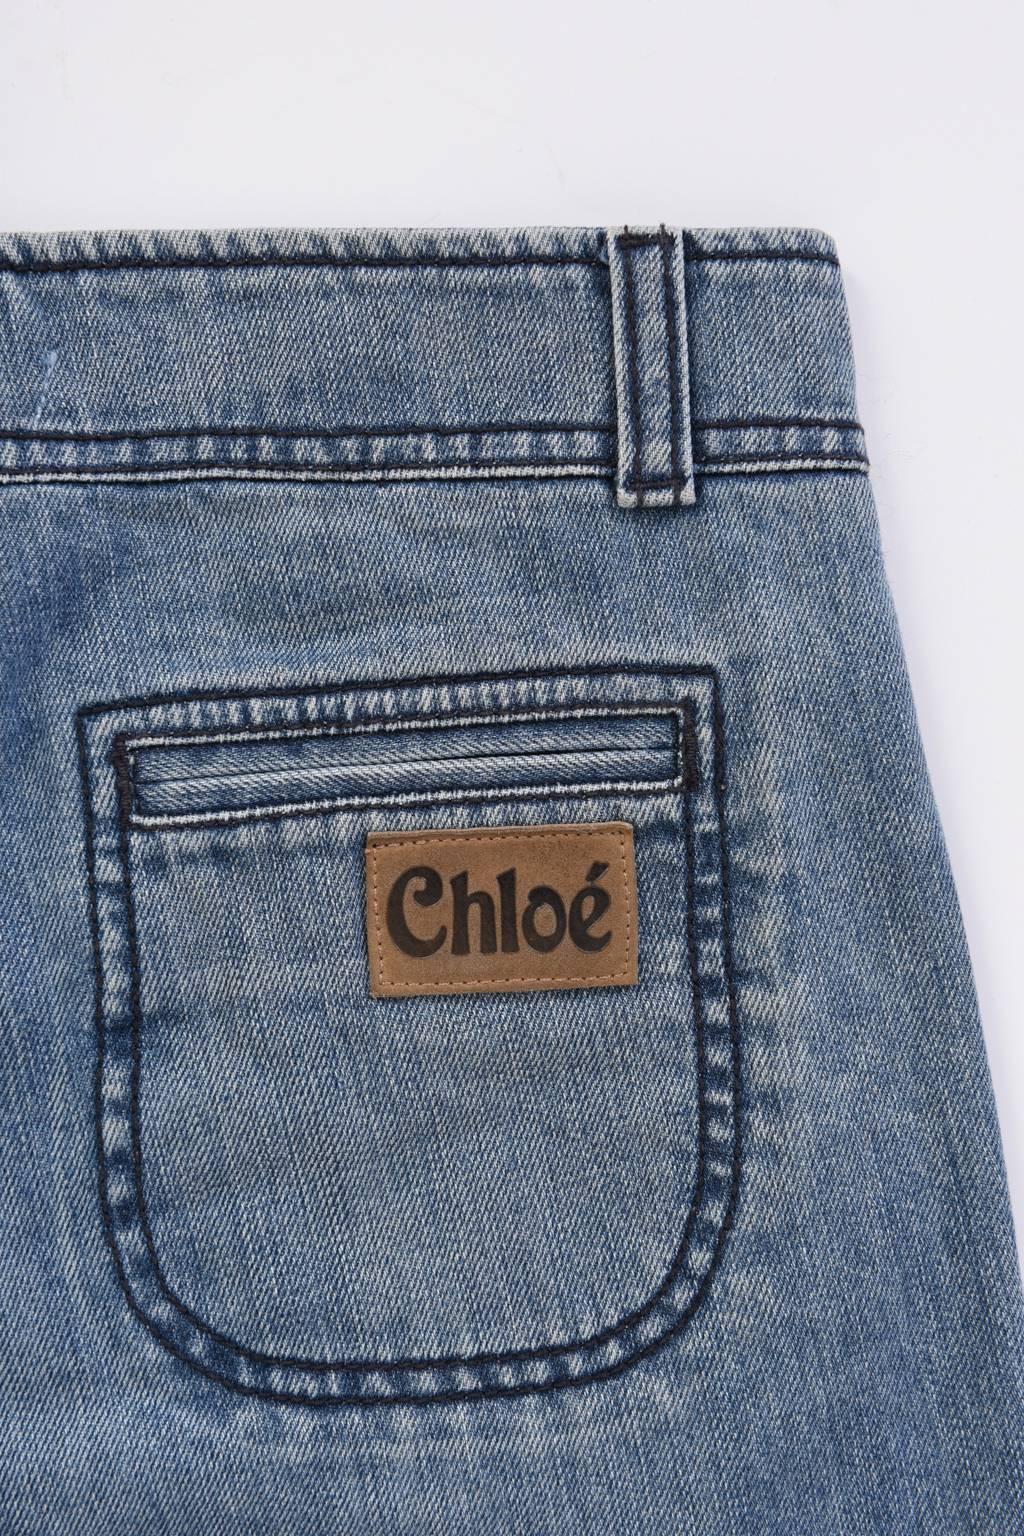 Chloé Jeans  For Sale 1